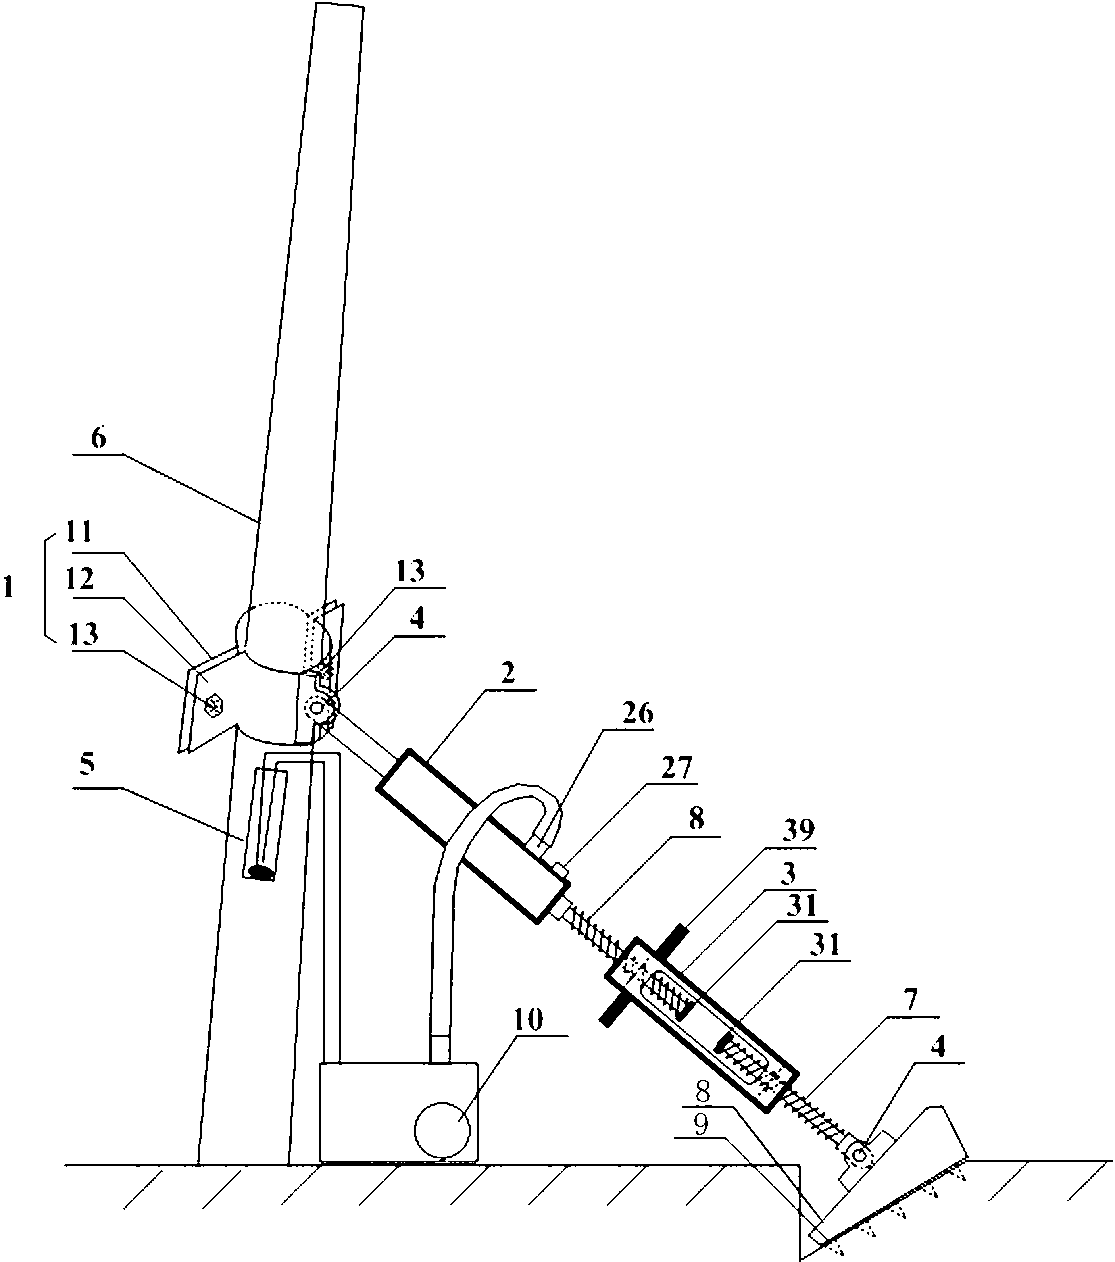 Full-automatic utility pole centralizer